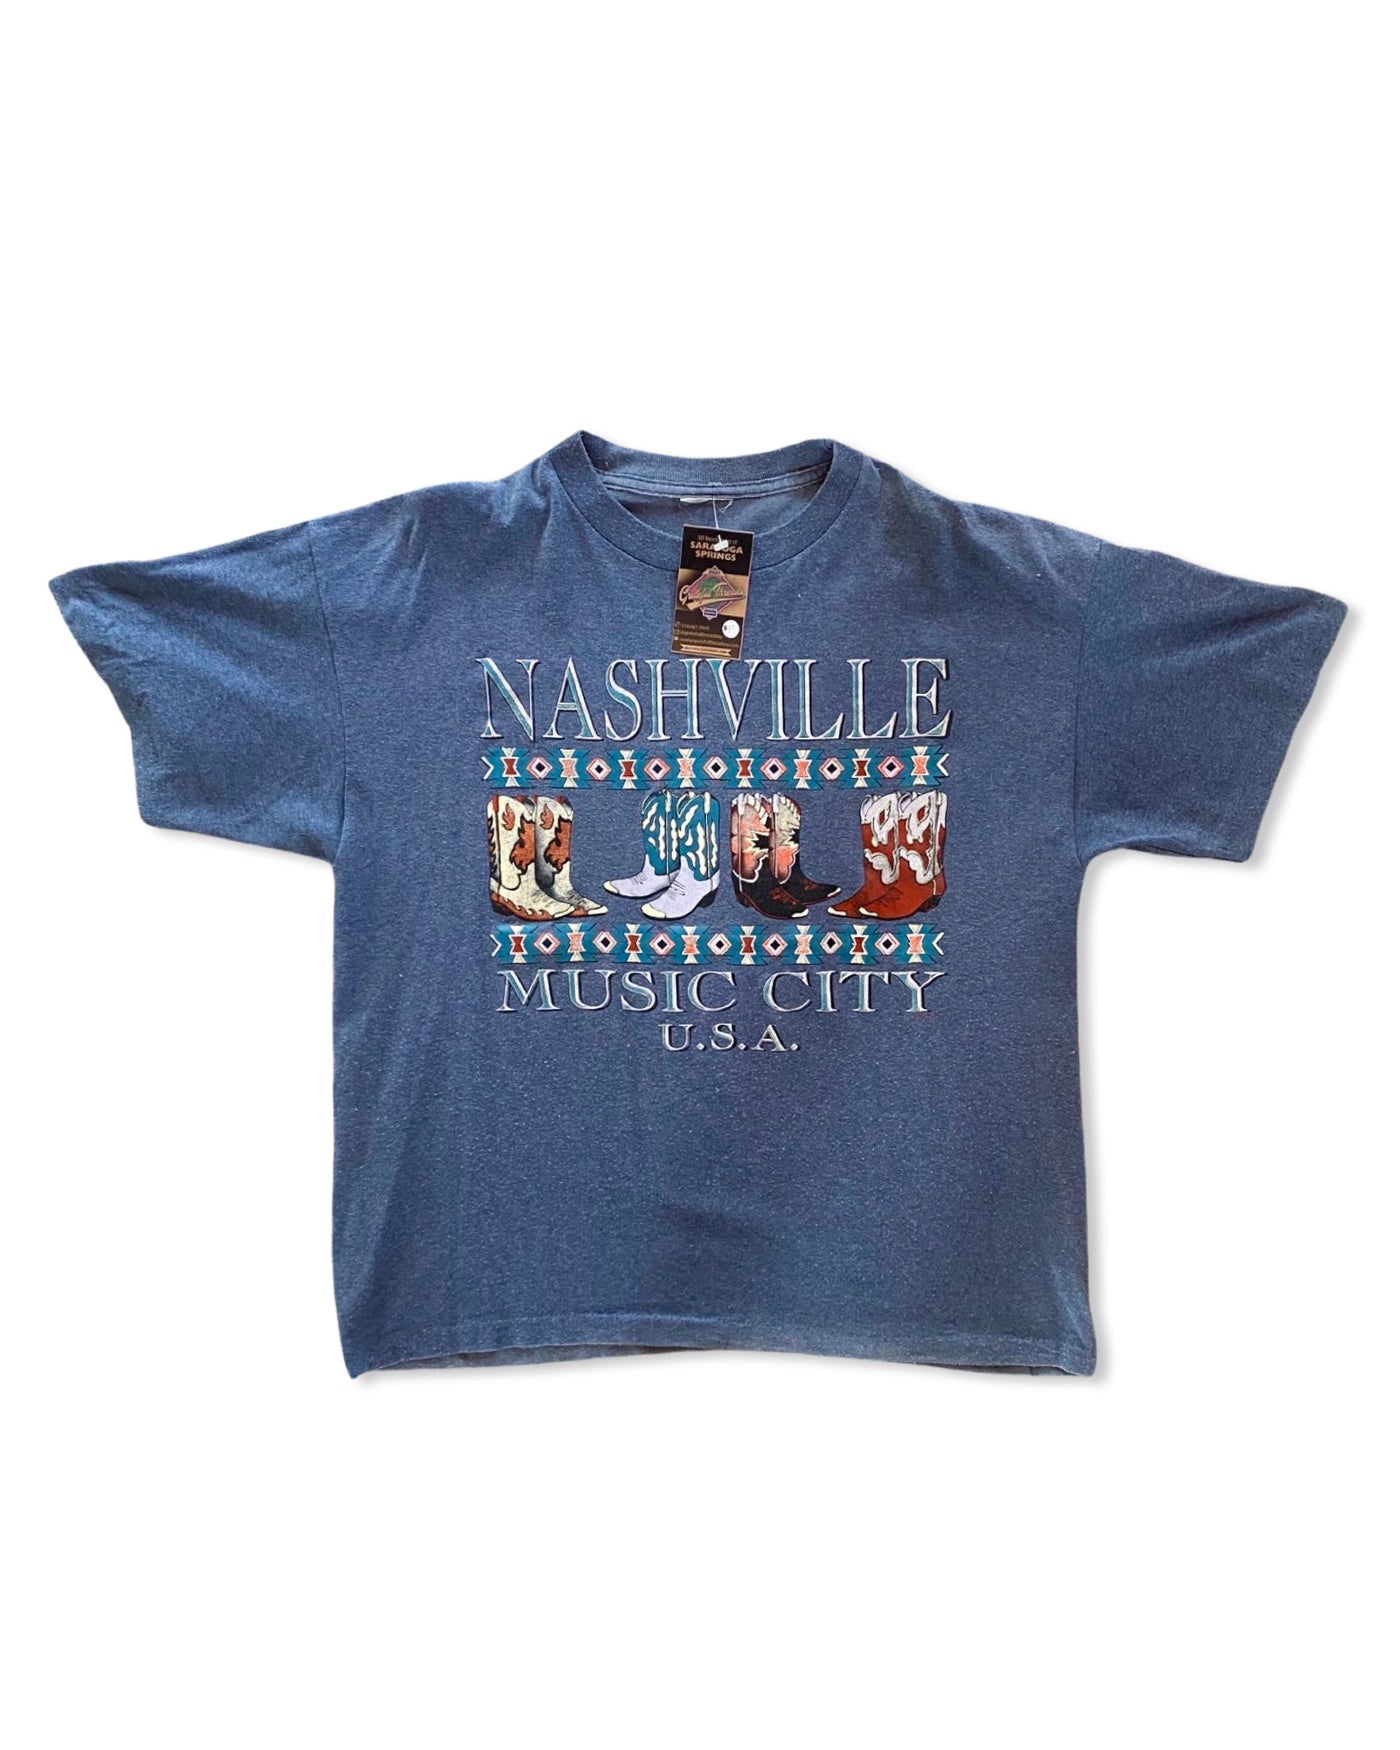 Vintage 90s Nashville Music City T-Shirt